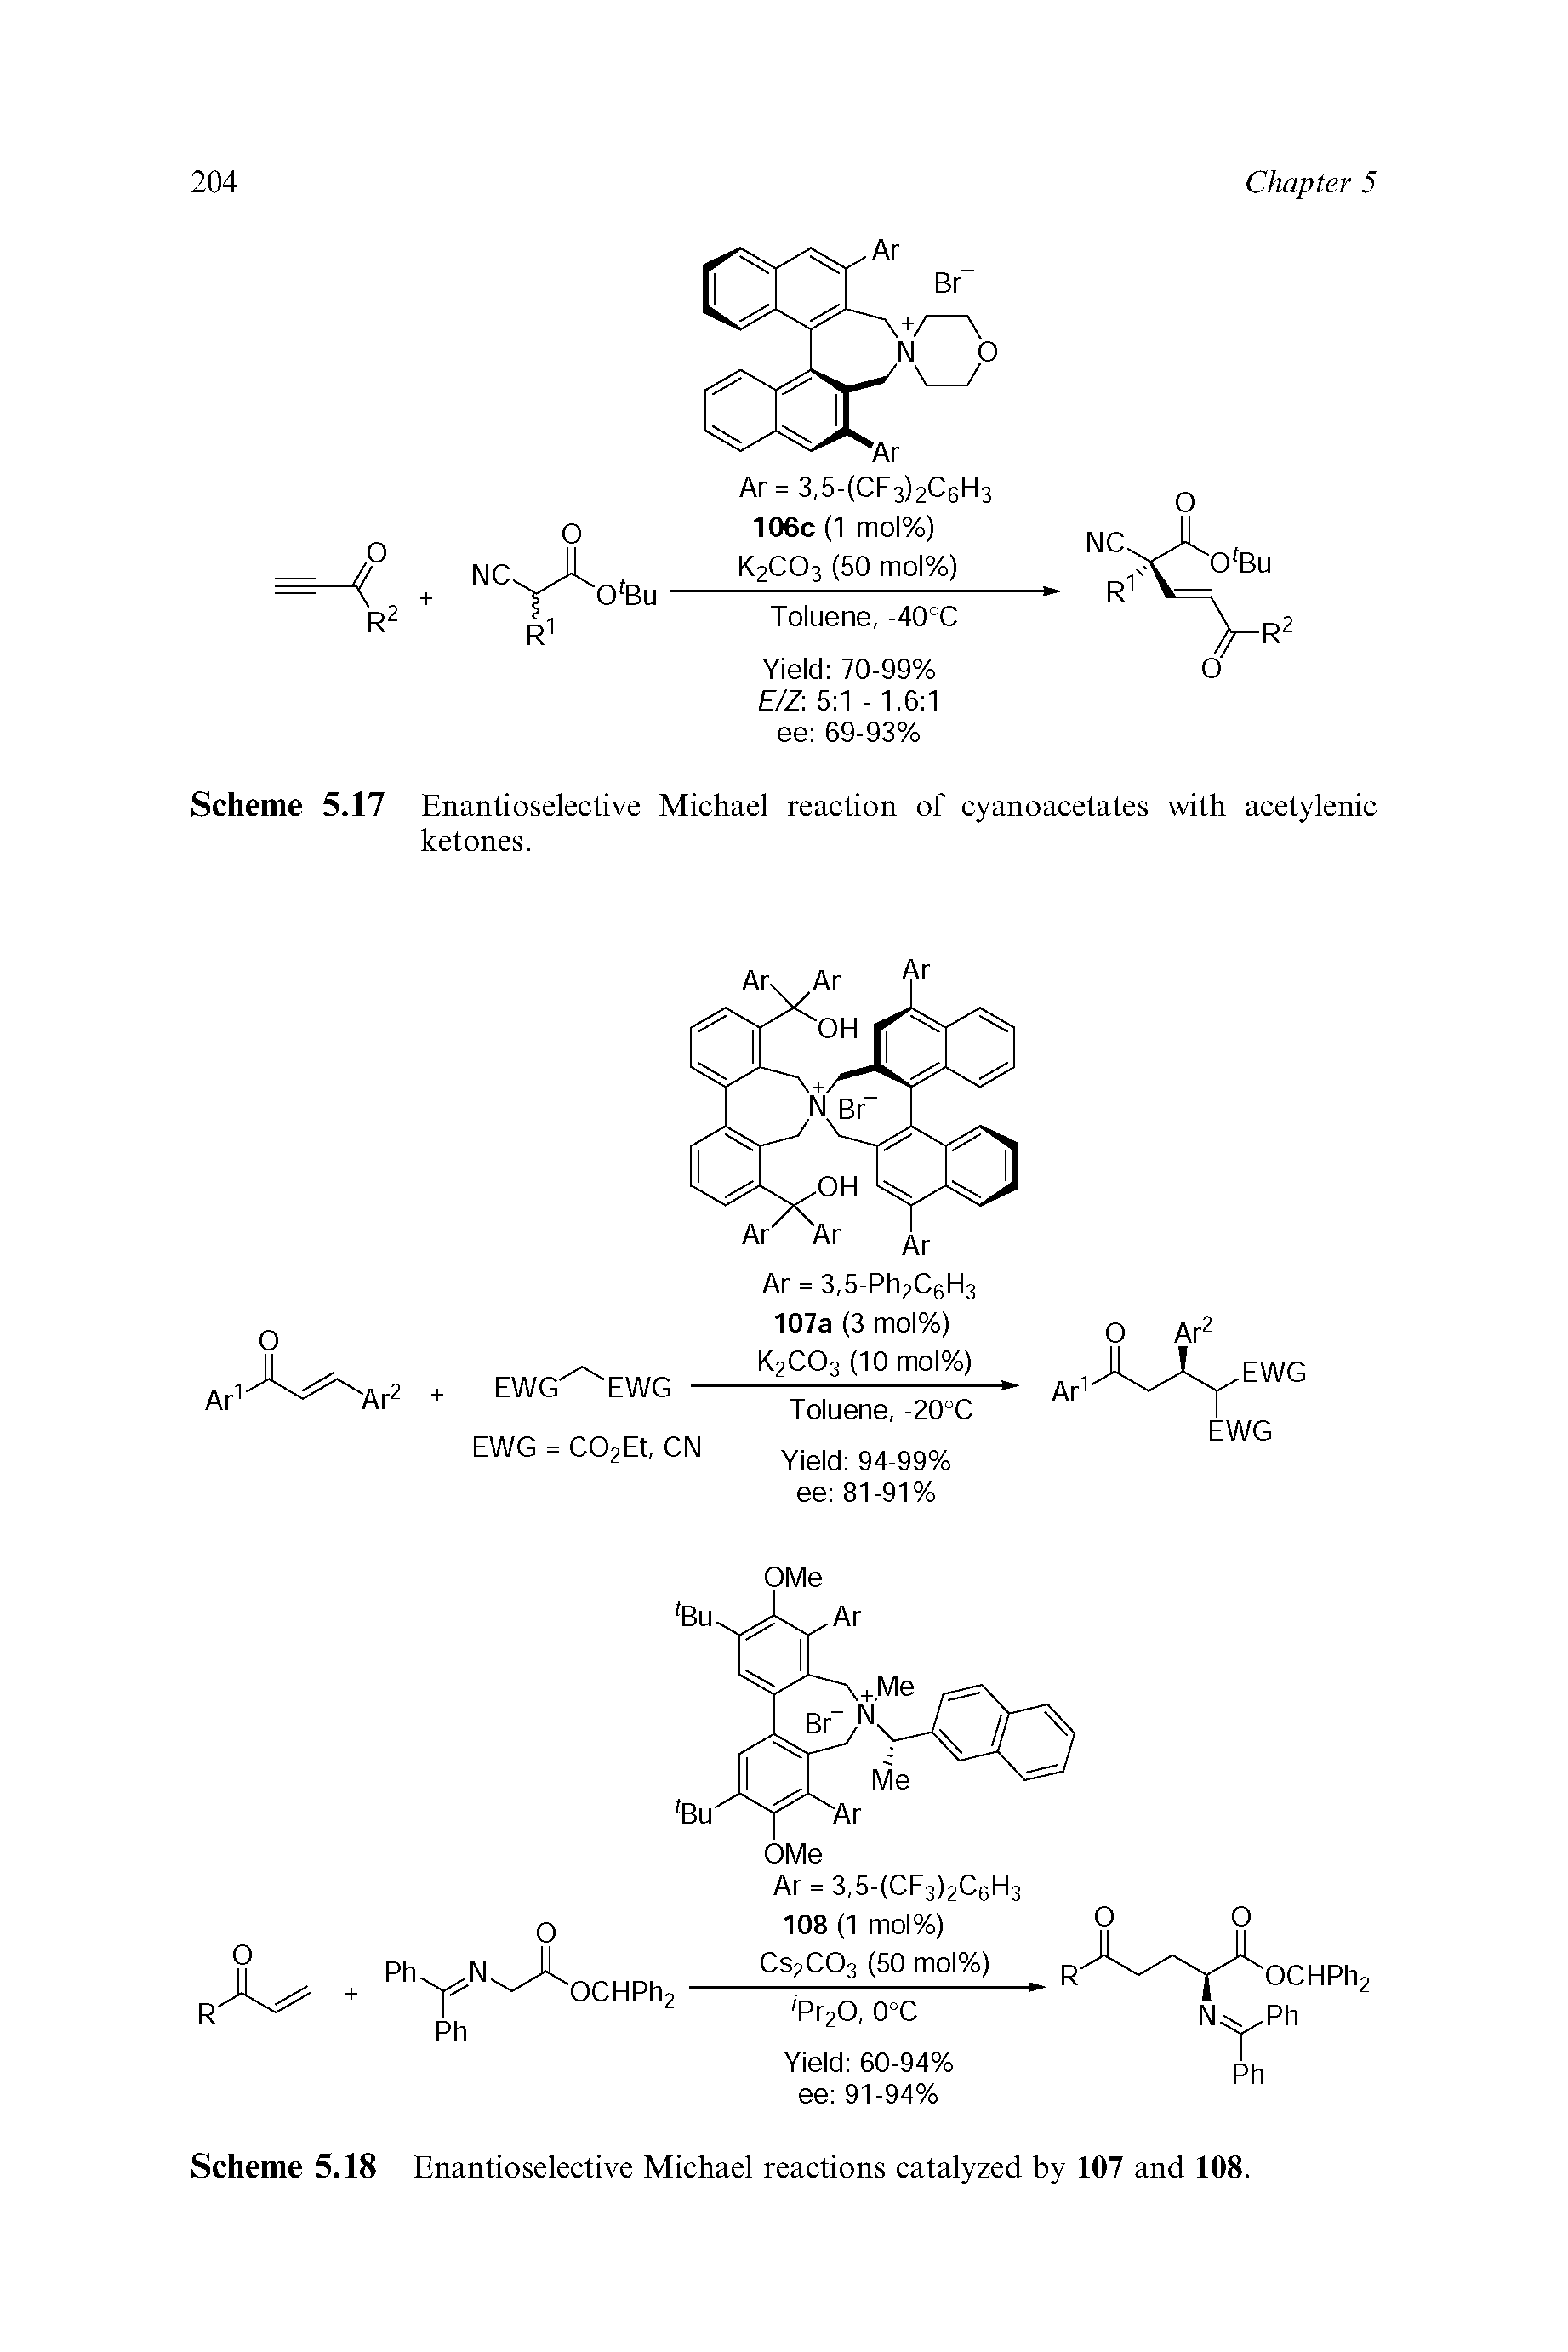 Scheme 5.17 Enantioselective Michael reaction of cyanoacetates with acetylenic ketones.